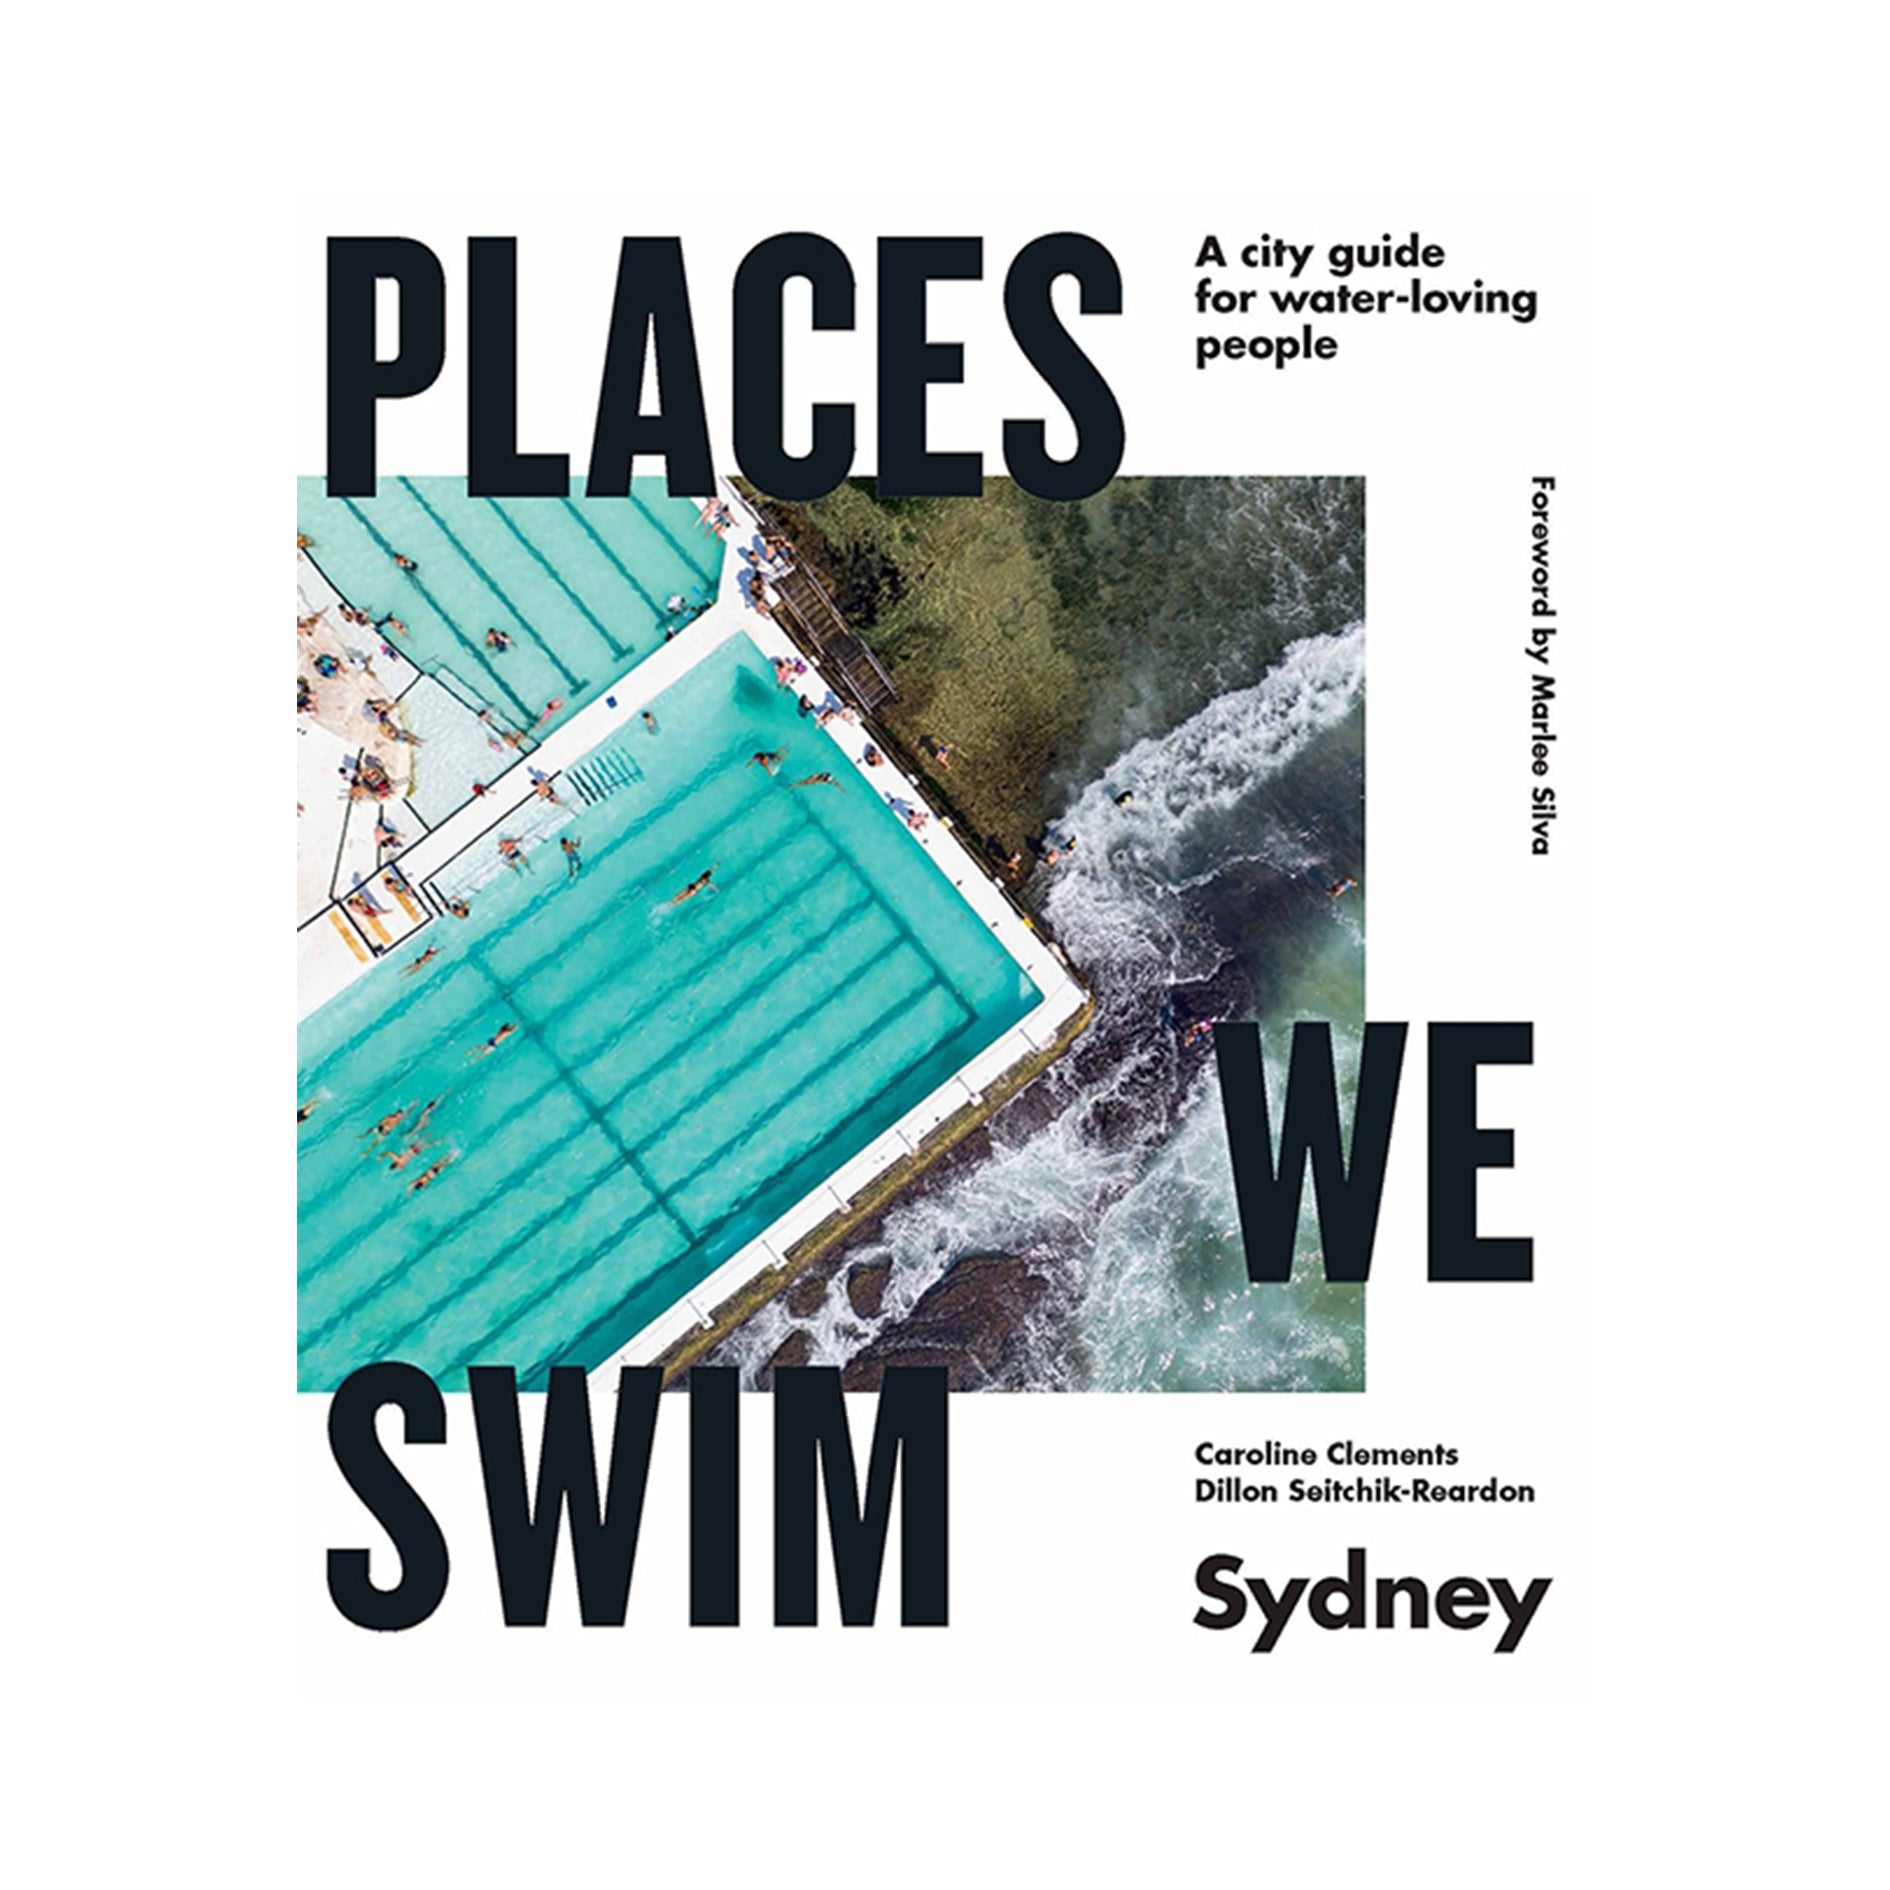 Places We Swim Sydney